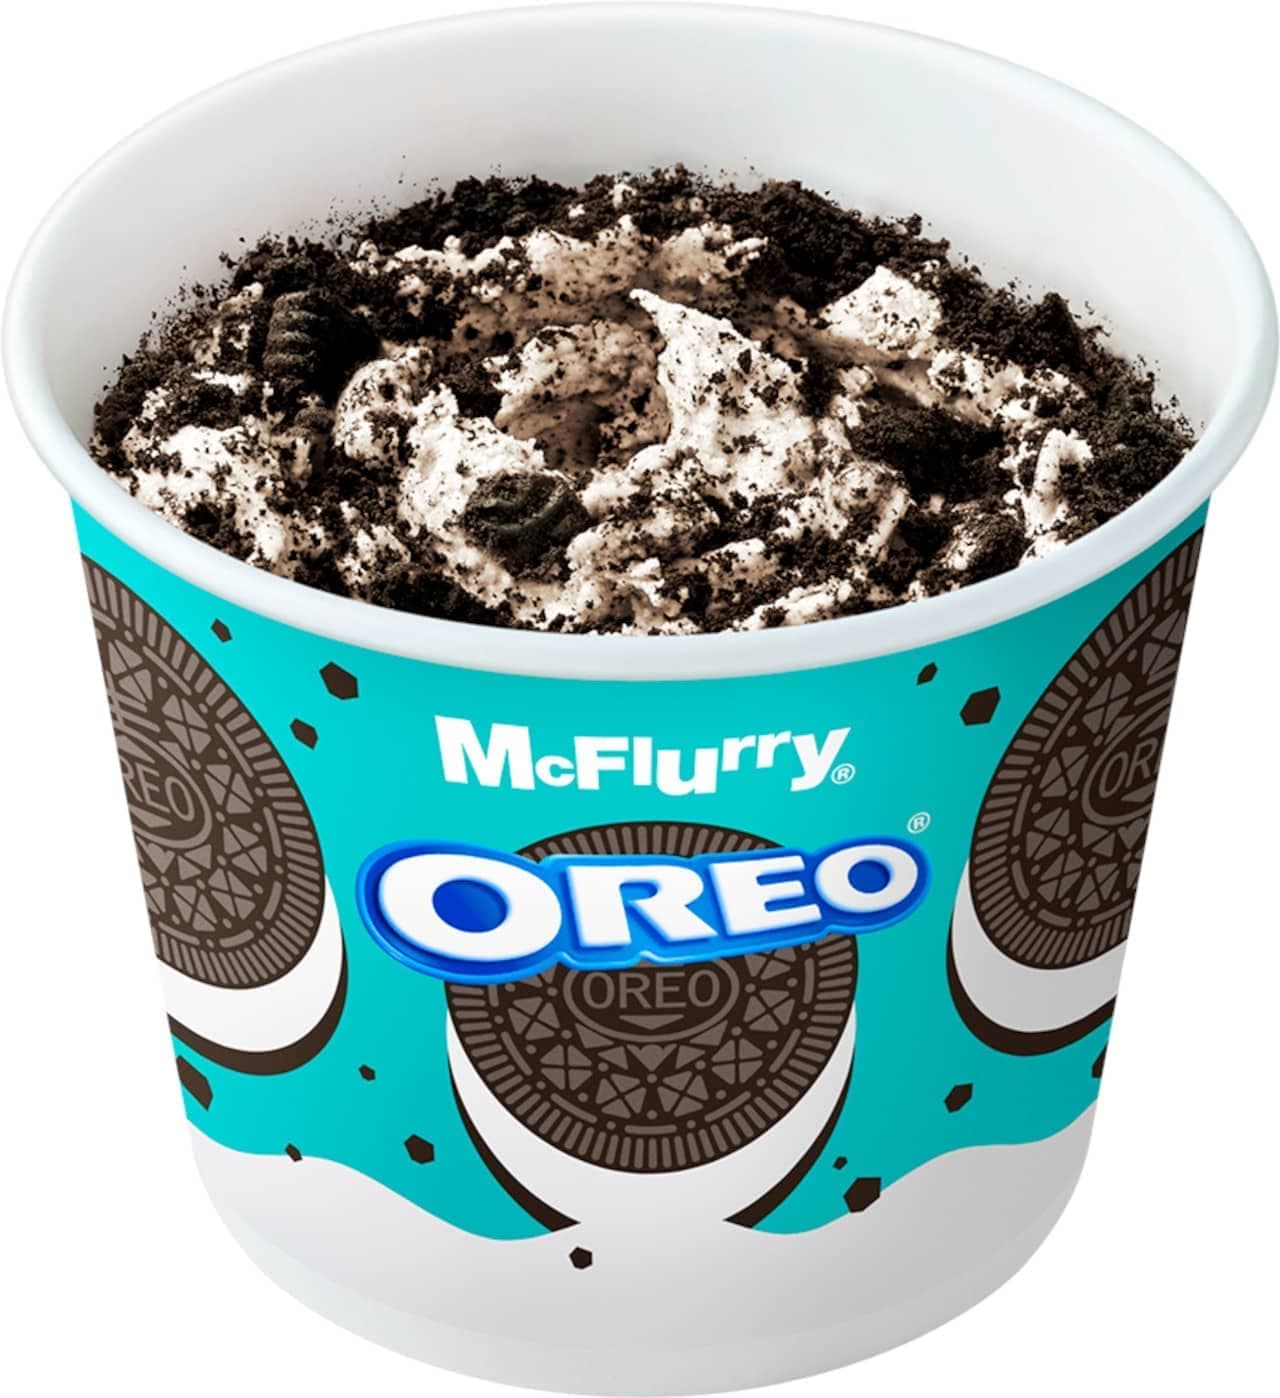 McFlurry "Super Oreo Cookie" limited quantity original cup